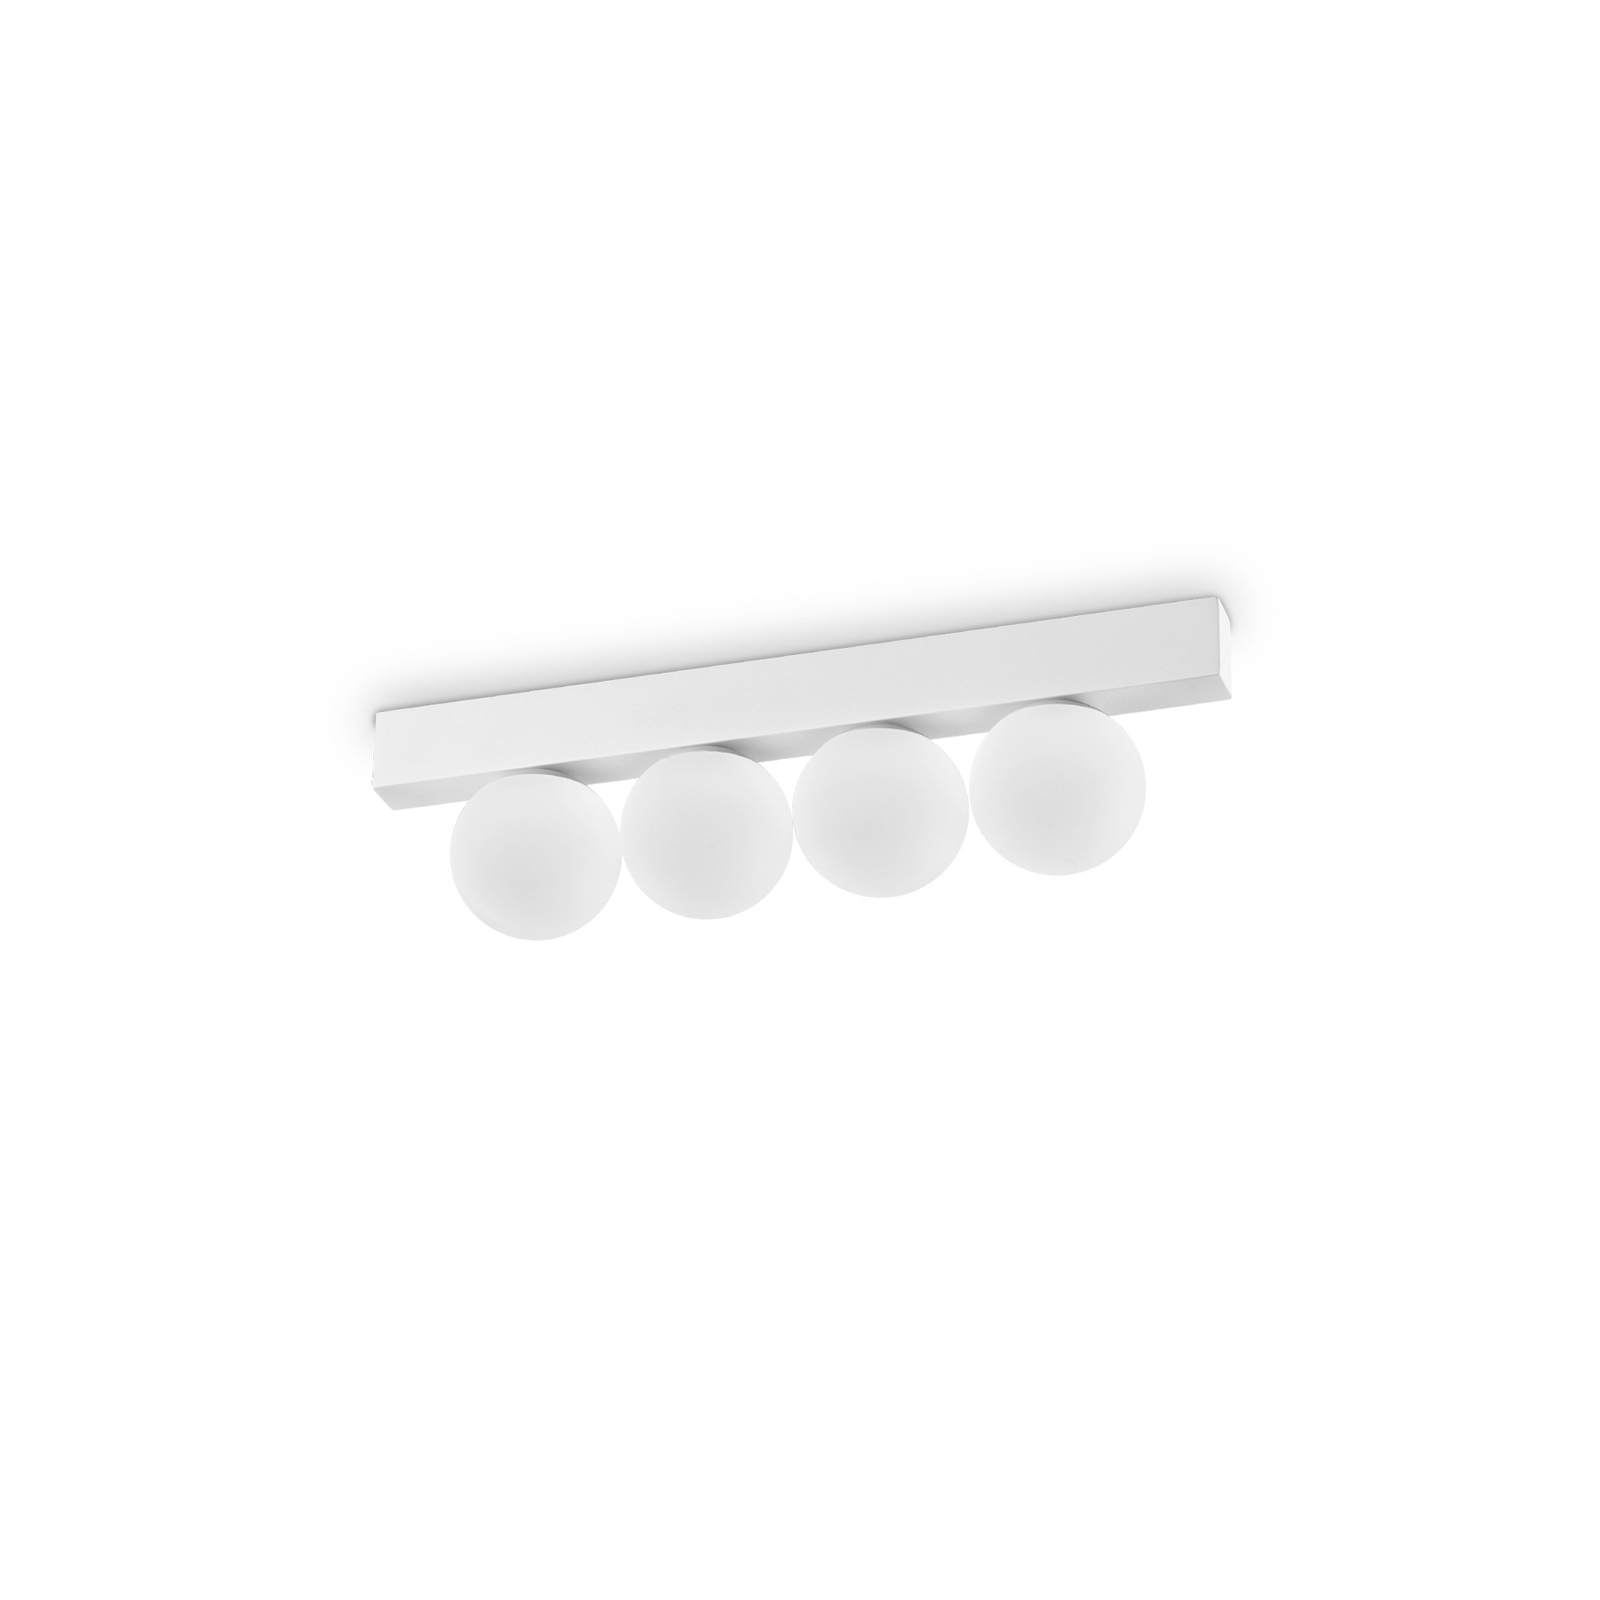 Ideal Lux lampa sufitowa LED Ping Pong biała 4-punktowa, szkło opalowe